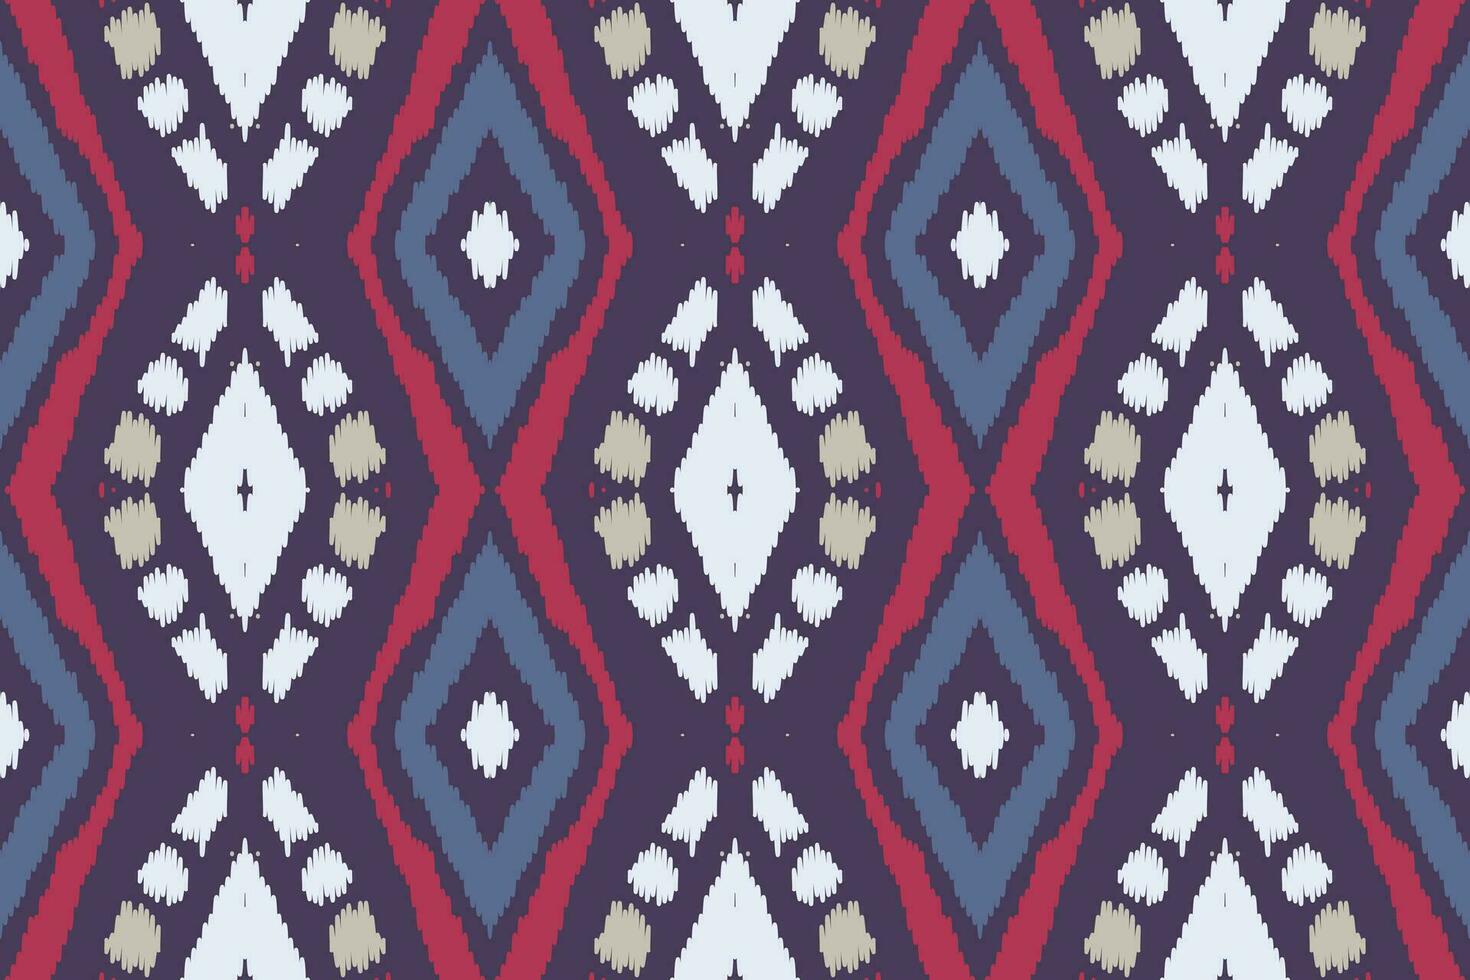 motivo ikat floral cachemir bordado antecedentes. ikat rayas geométrico étnico oriental modelo tradicional. ikat azteca estilo resumen diseño para impresión textura,tela,sari,sari,alfombra. vector